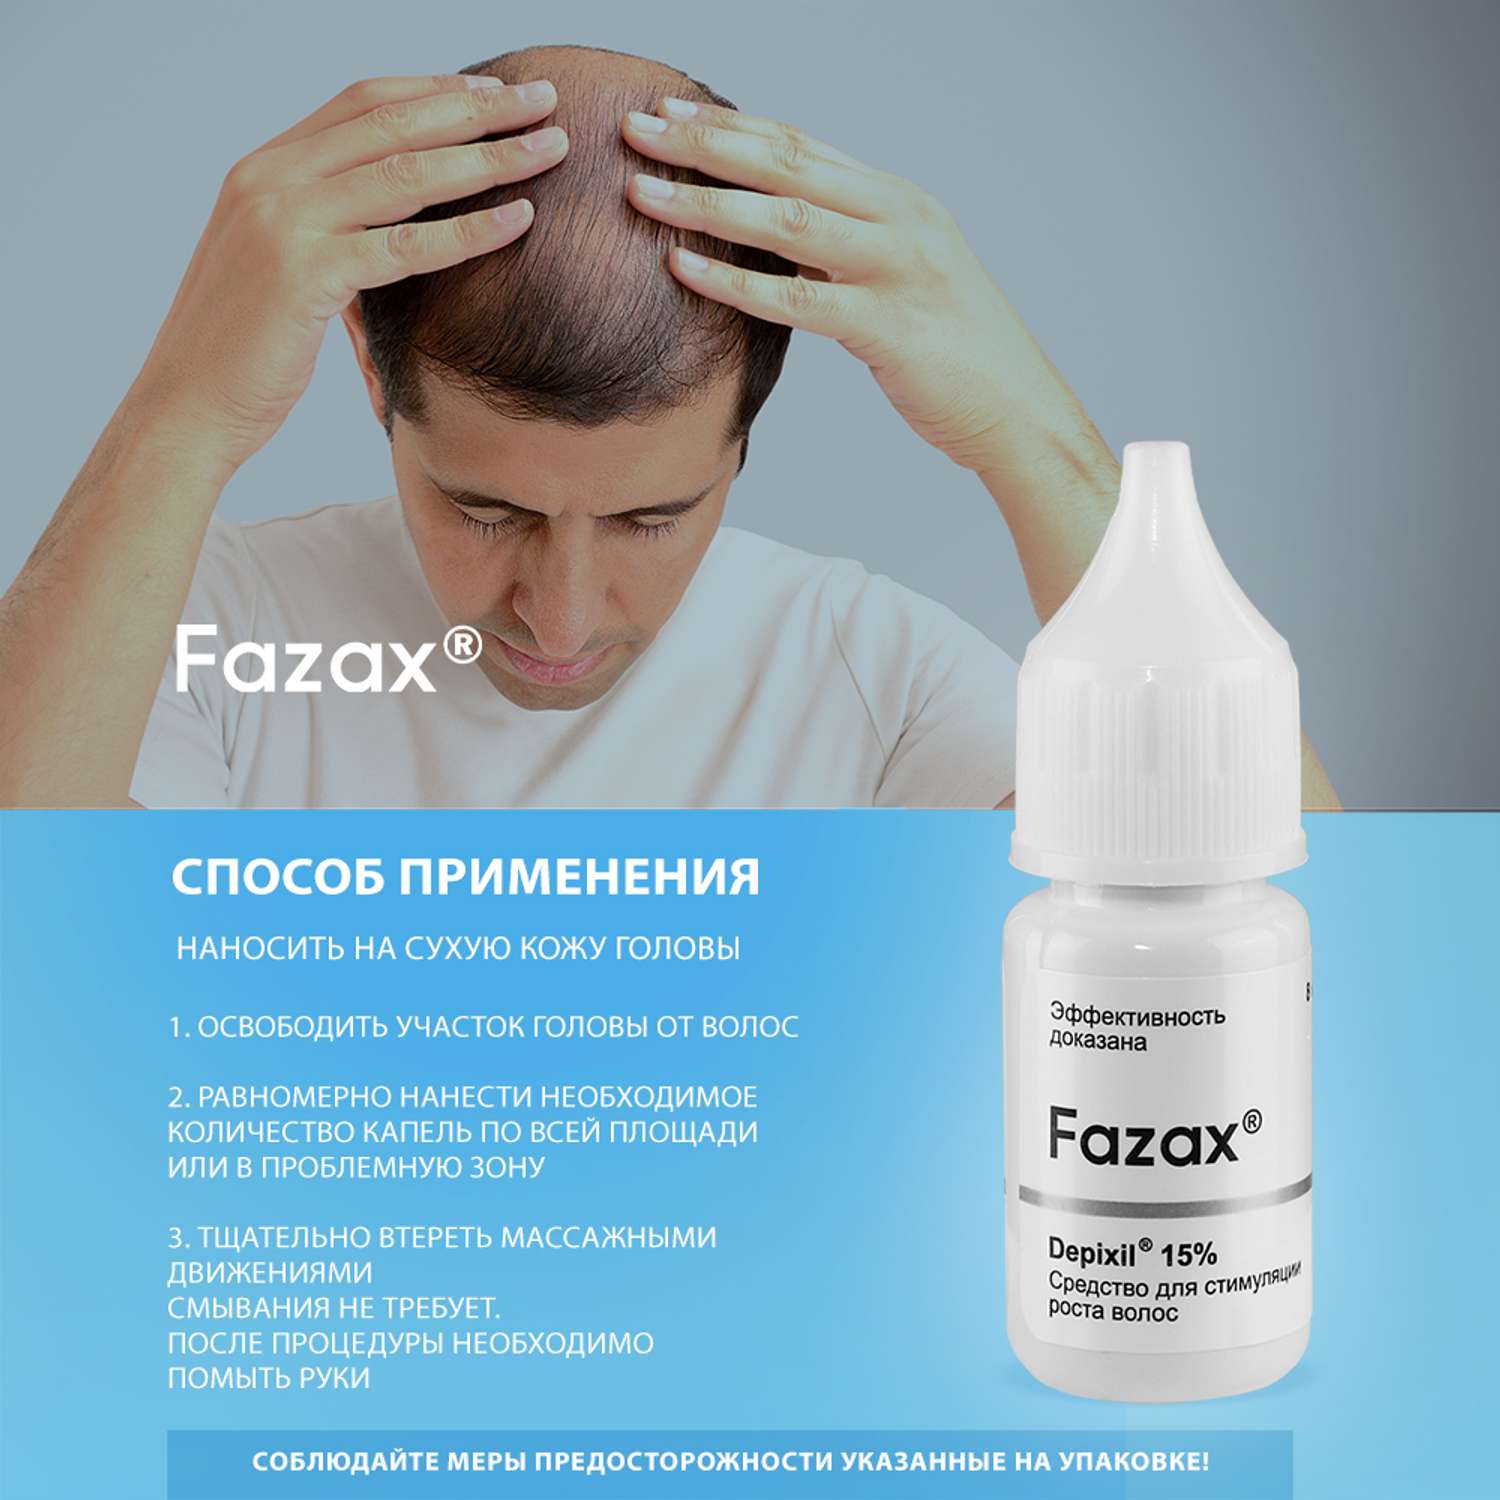 FAZAX Средство для стимуляции роста волос Depixil 15%